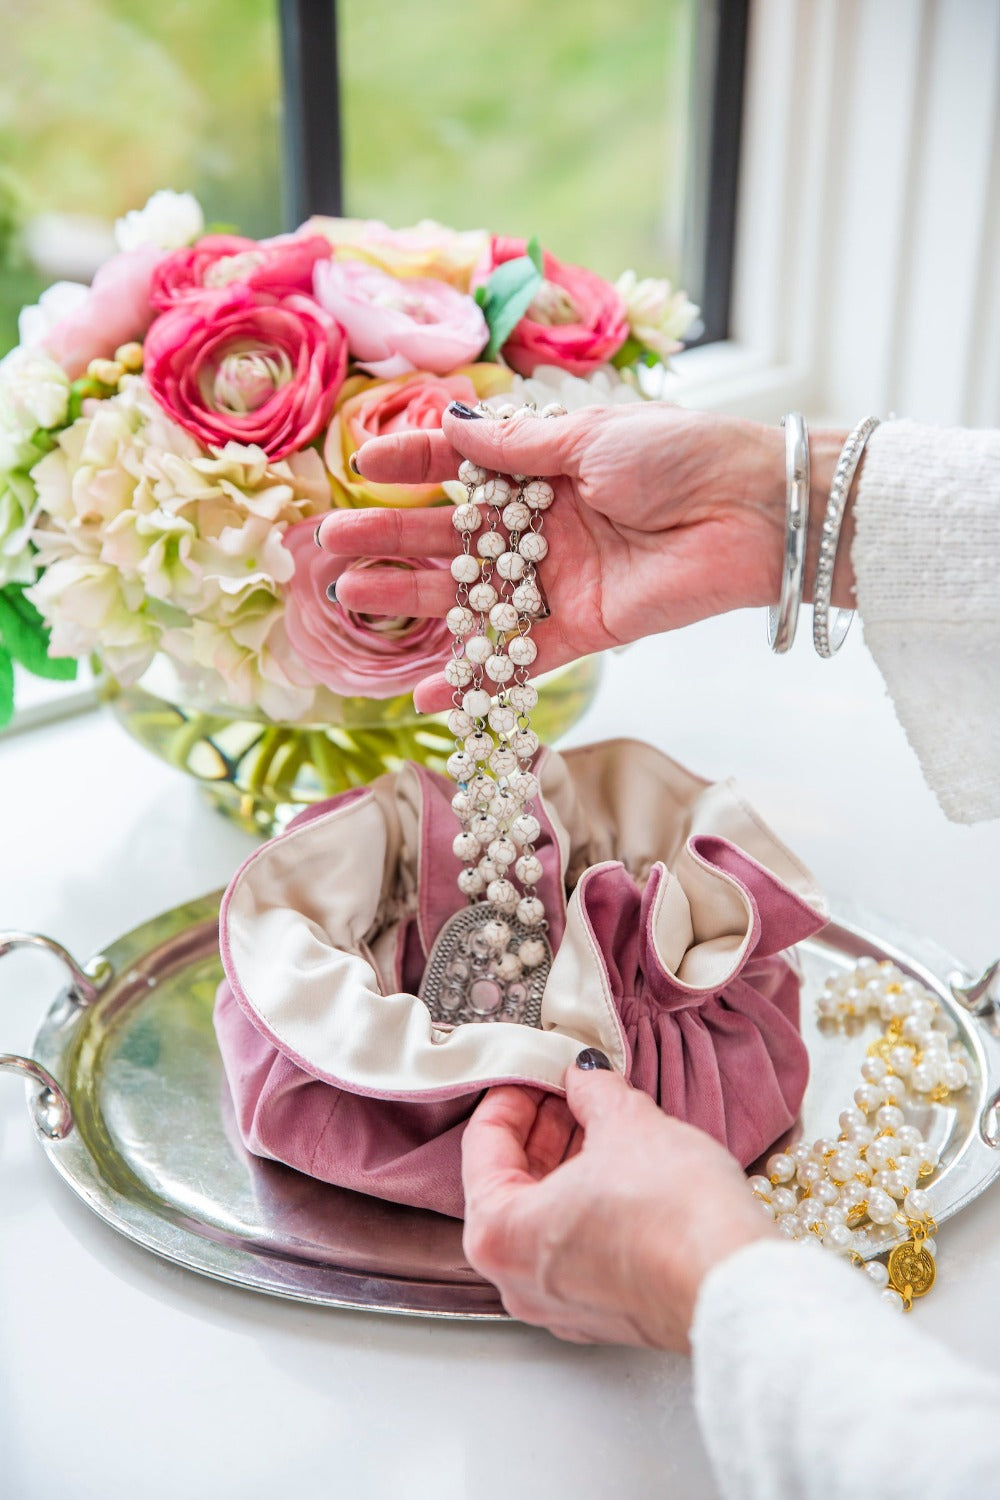 Velvet Jewelry Blossom Pouch